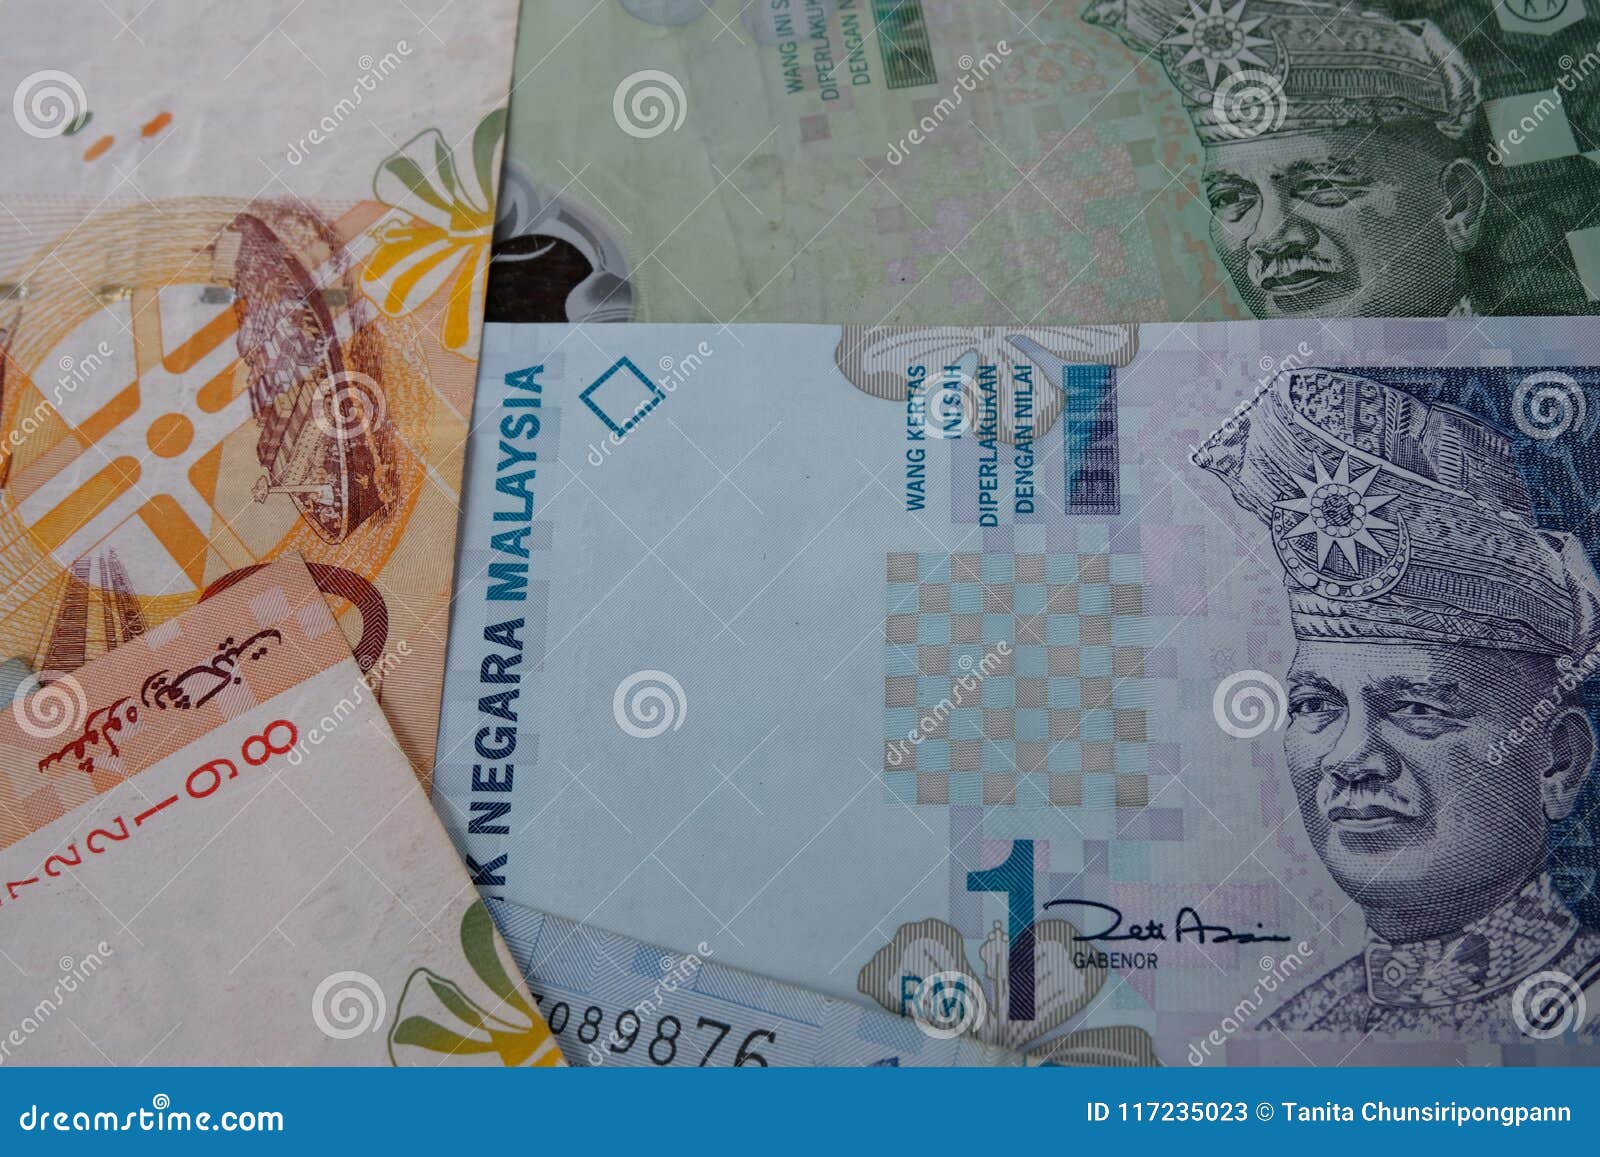 Malaysian Rupee banknote. stock image. Image of malaysia  117235023